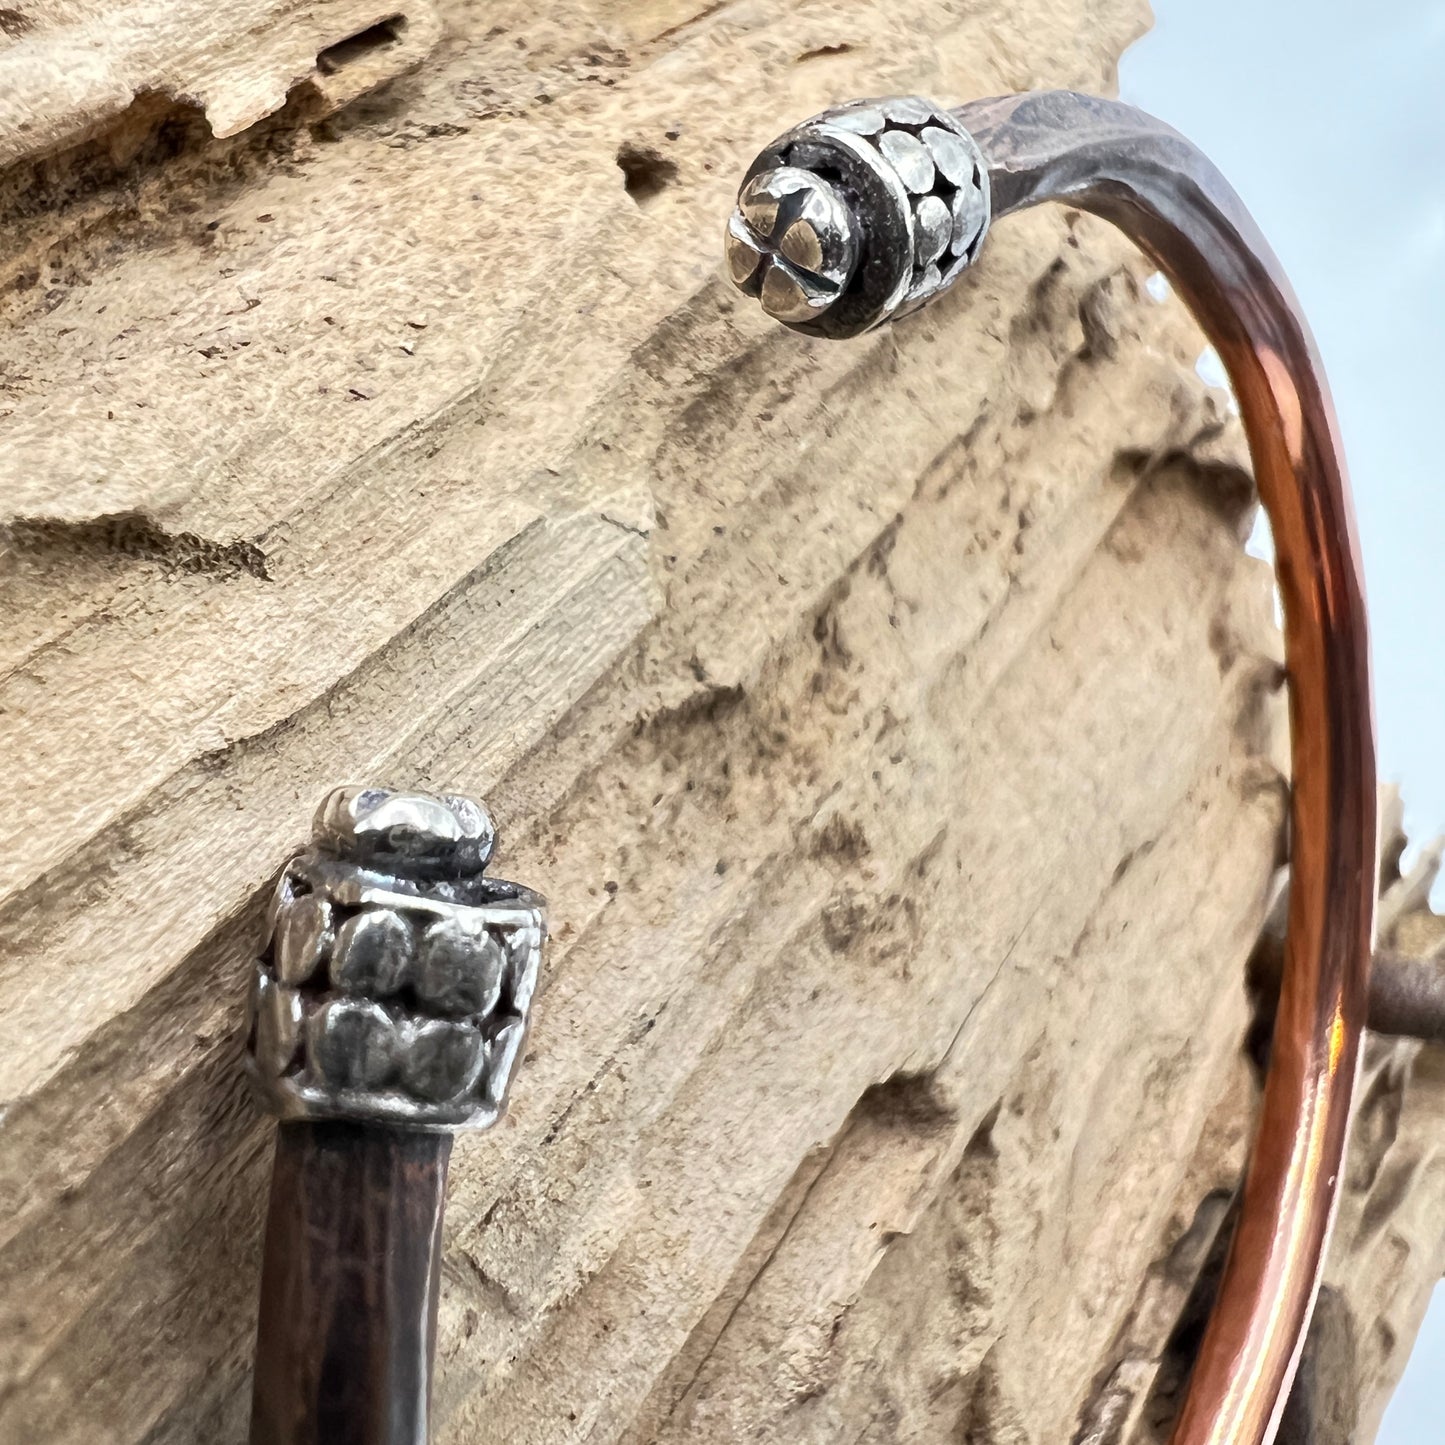 Copper Cuff Bracelet with Silver Barrel Ends